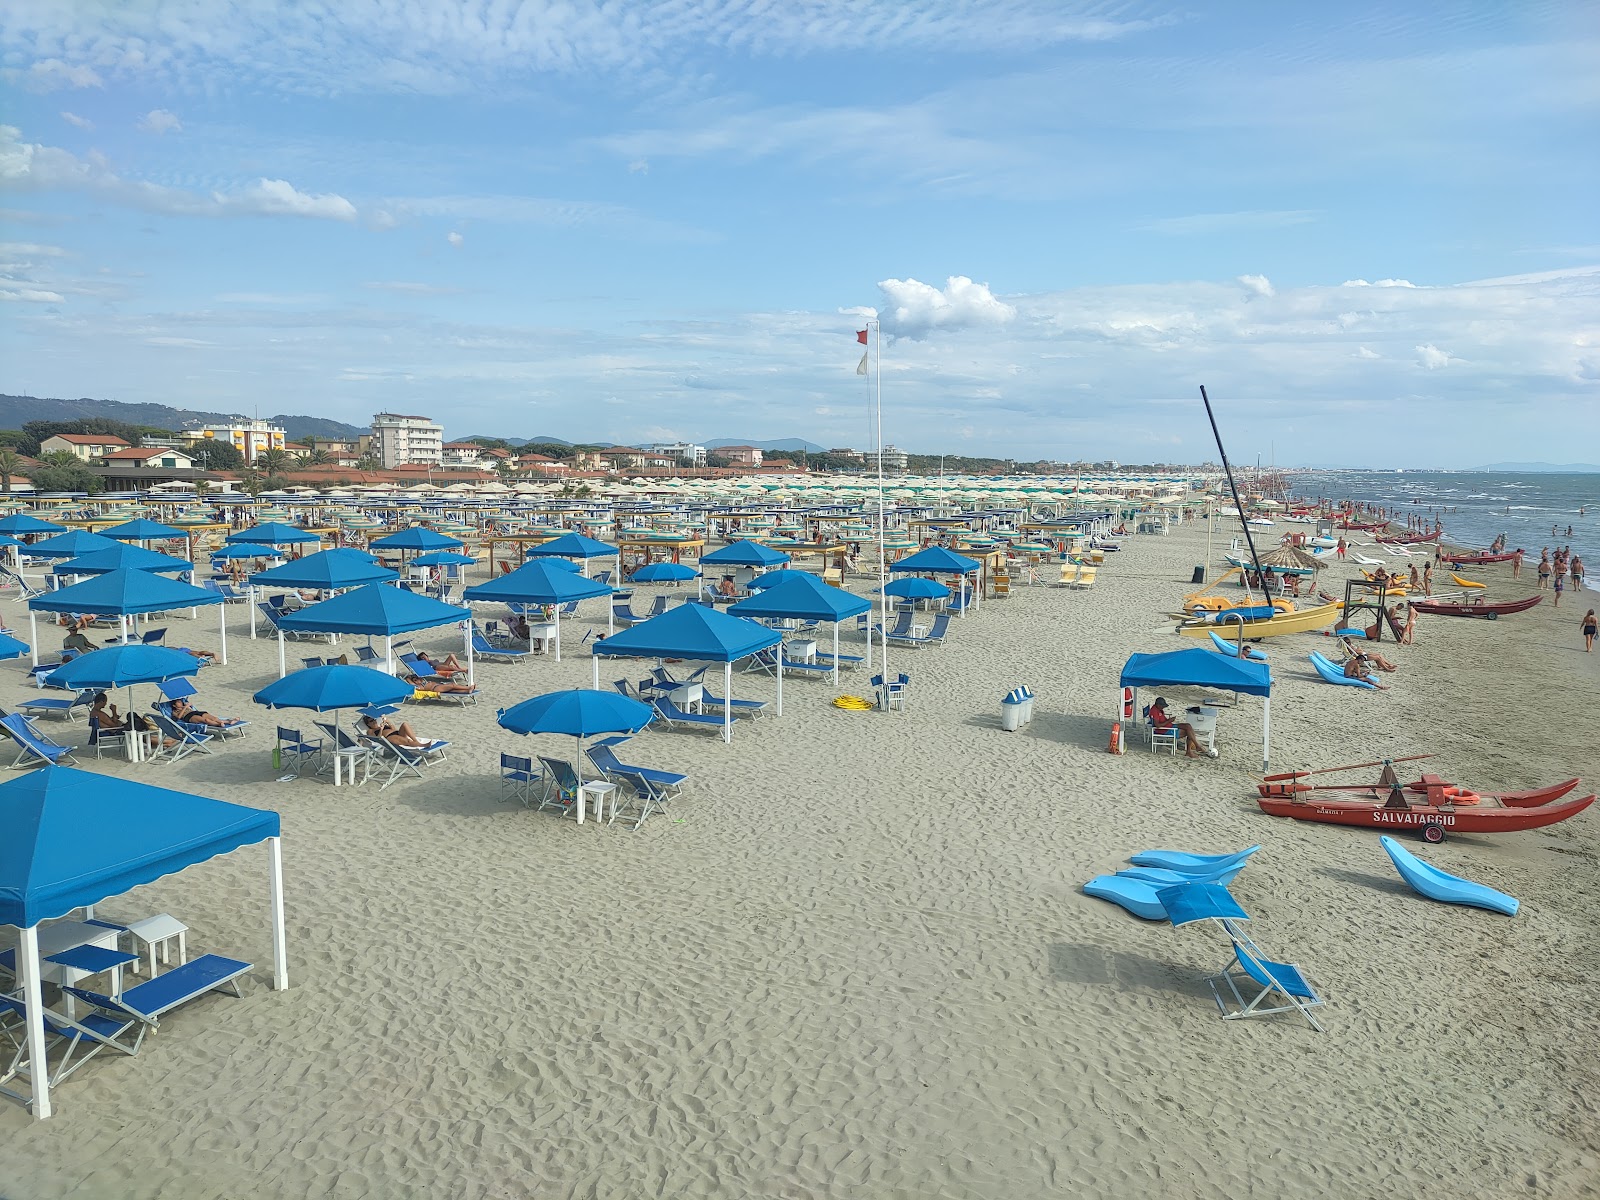 Foto van Spiaggia Marina di Pietrasanta met hoog niveau van netheid